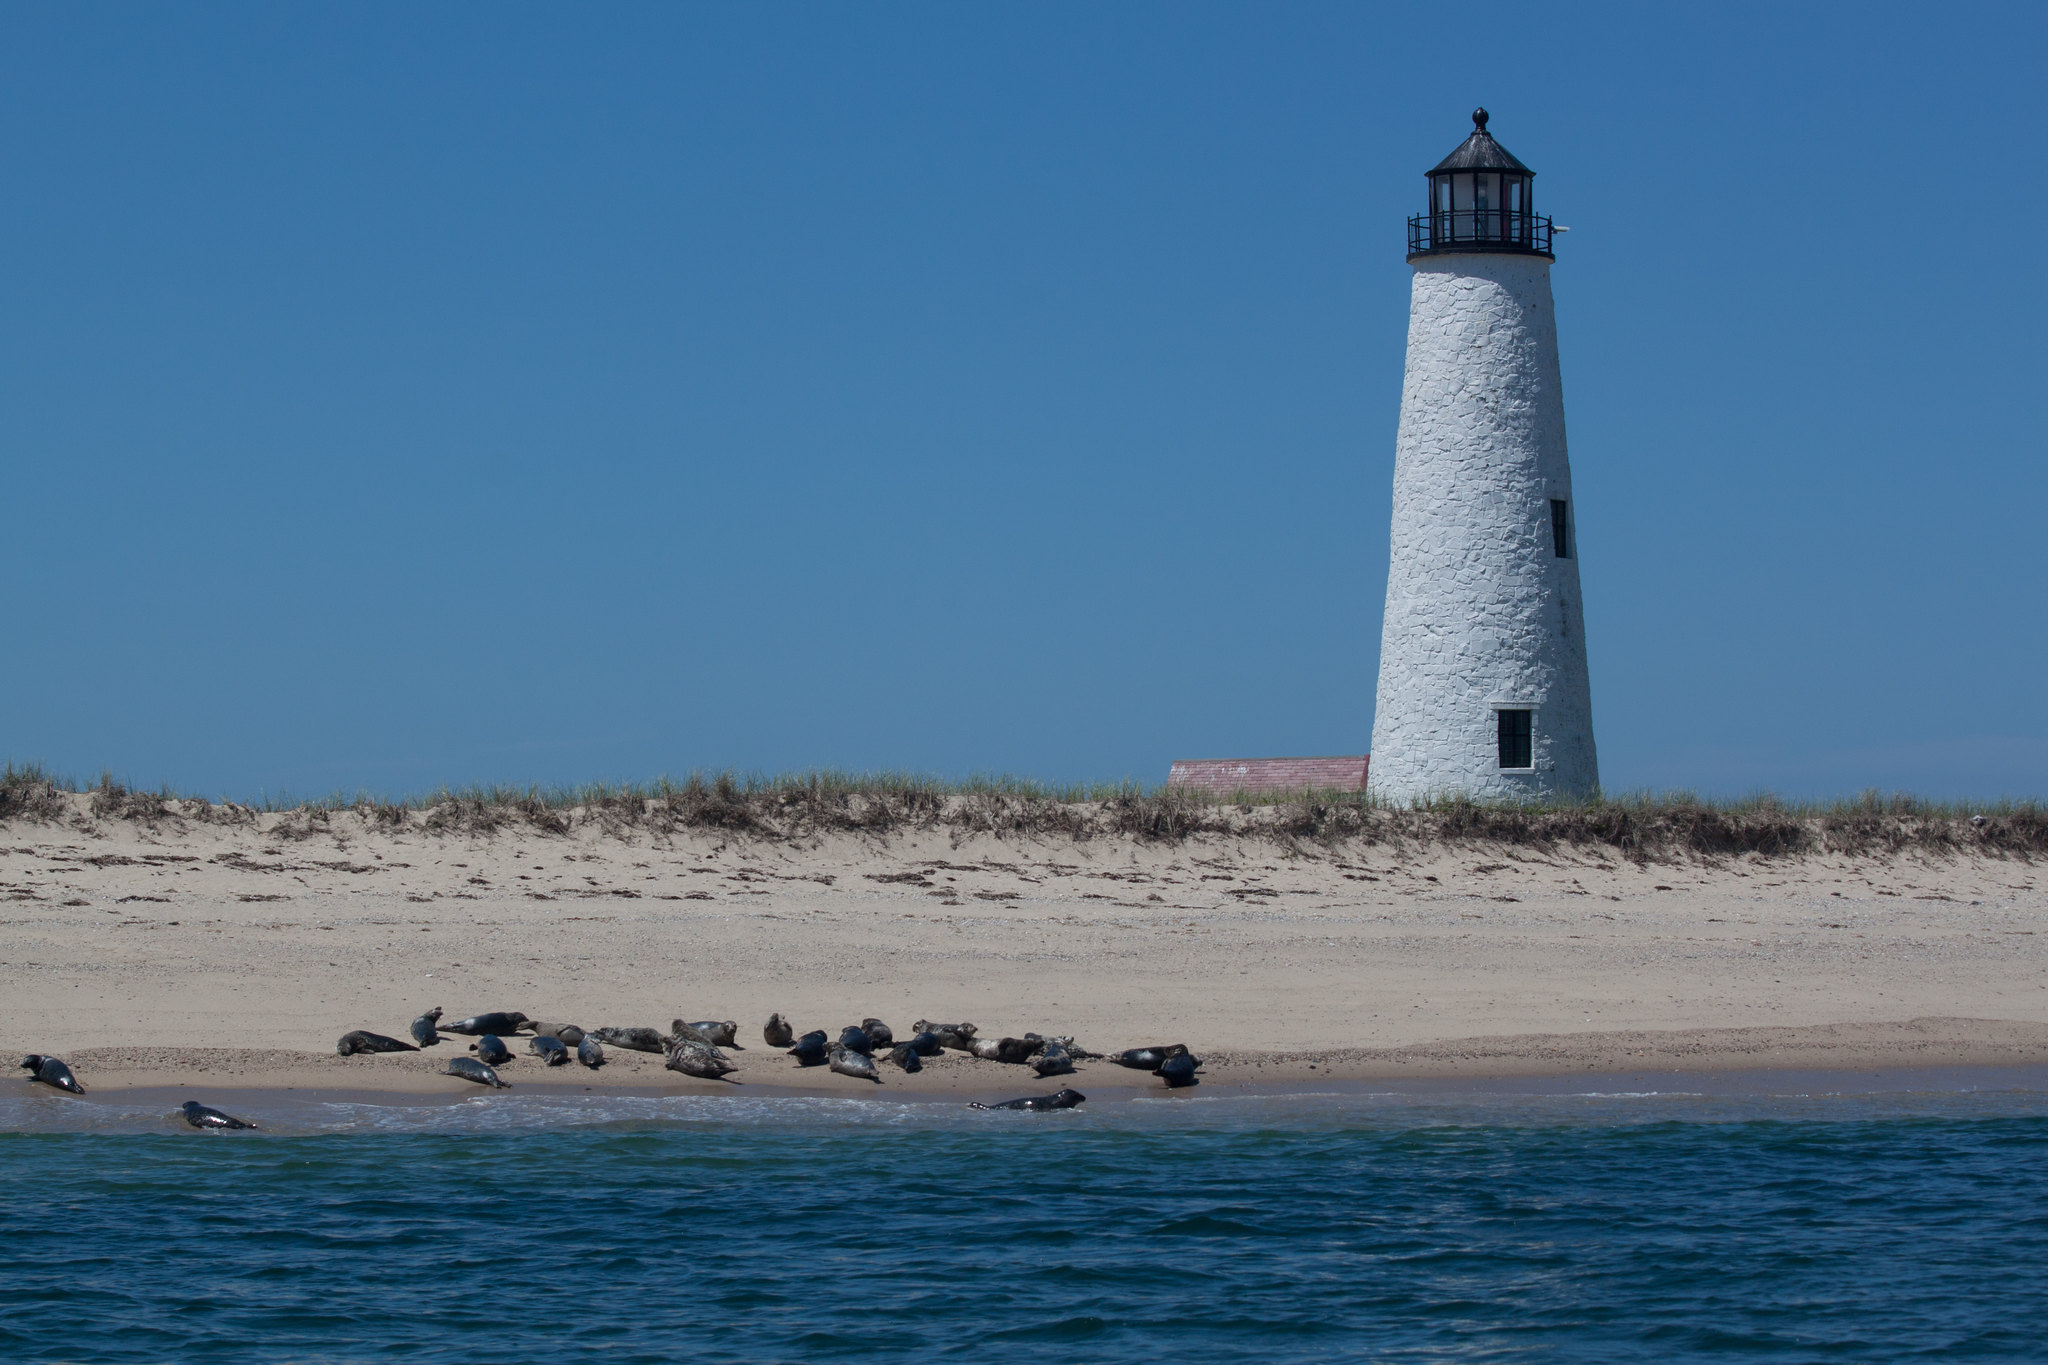 15 Things to do in Nantucket, Massachusetts